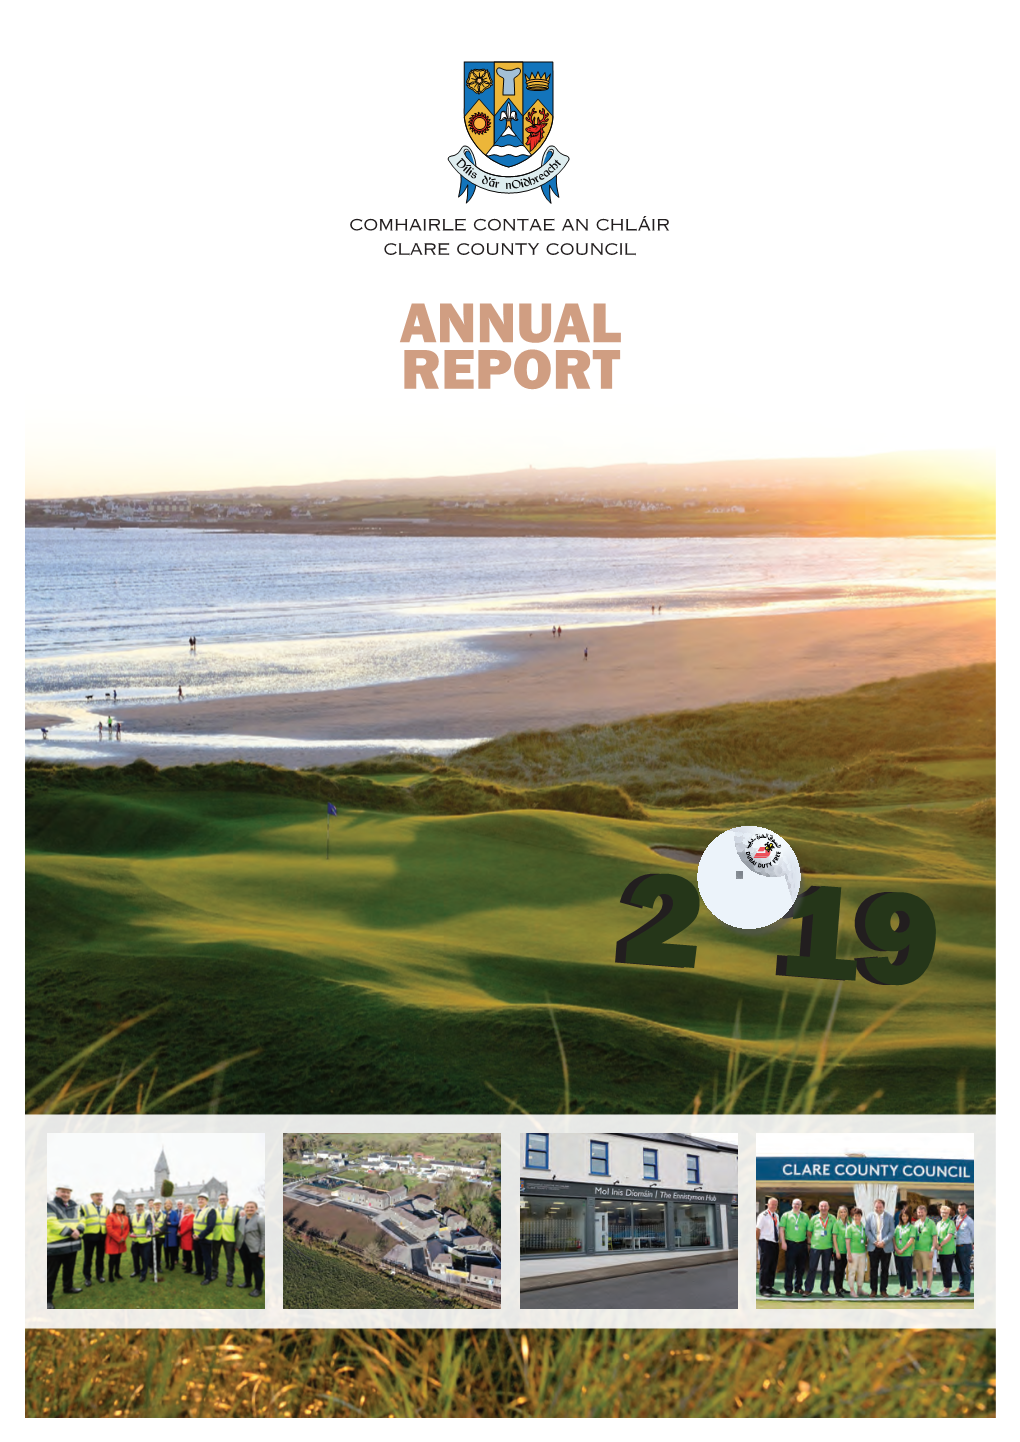 Annual Report 2019 - Clare County Council 5